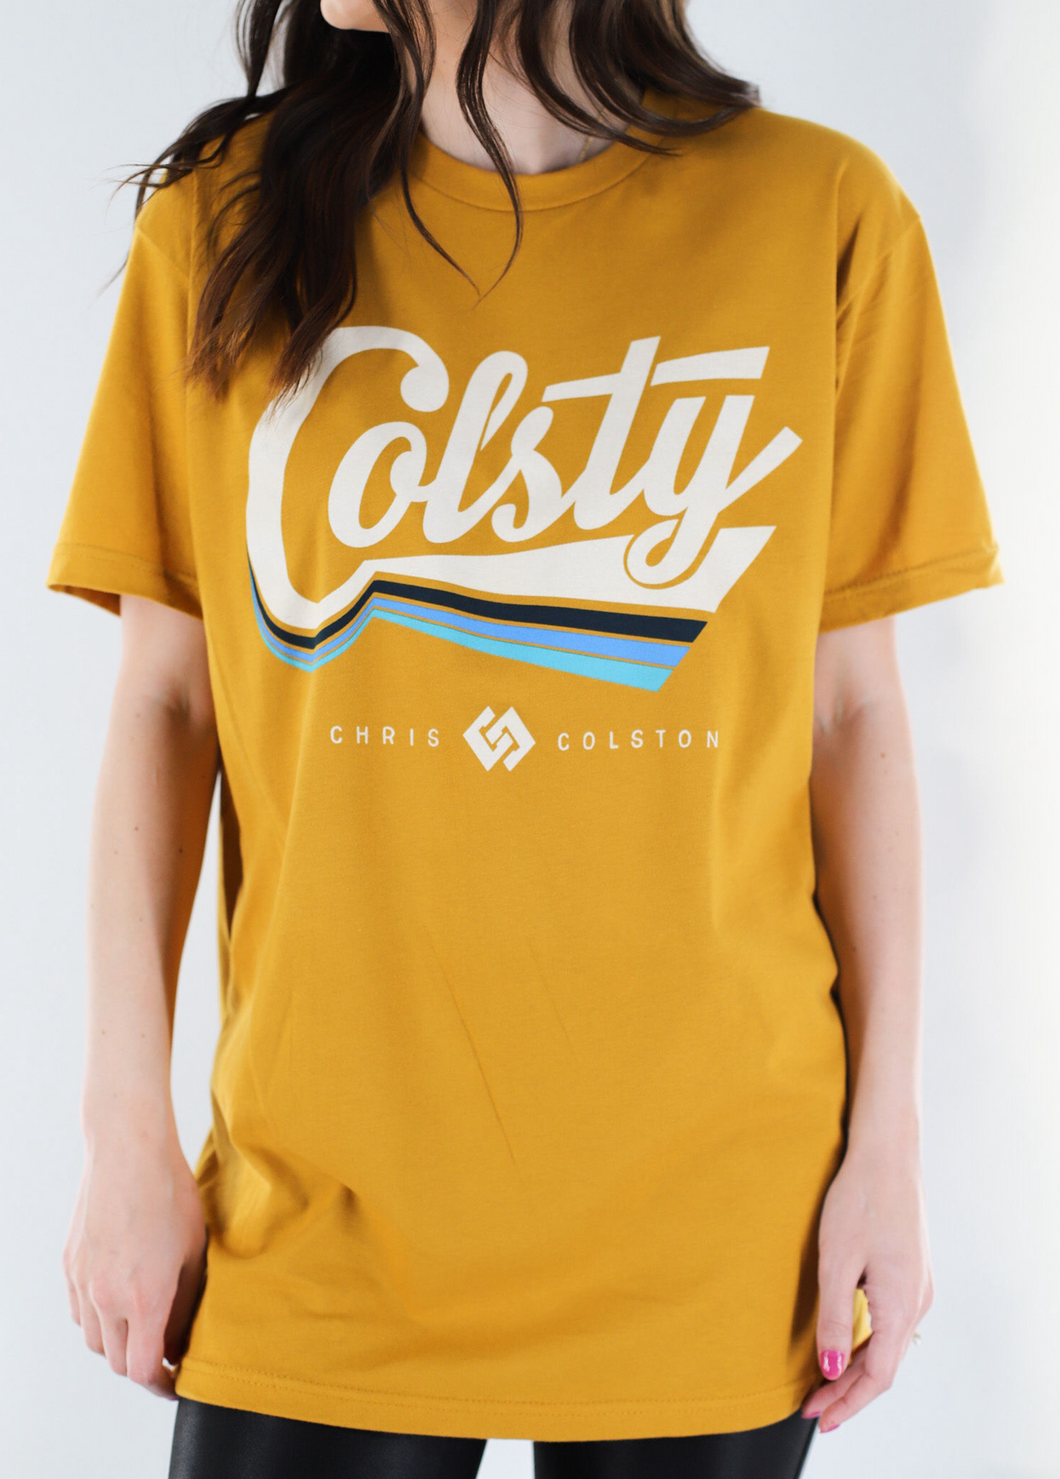 Colsty Yellow T-shirt